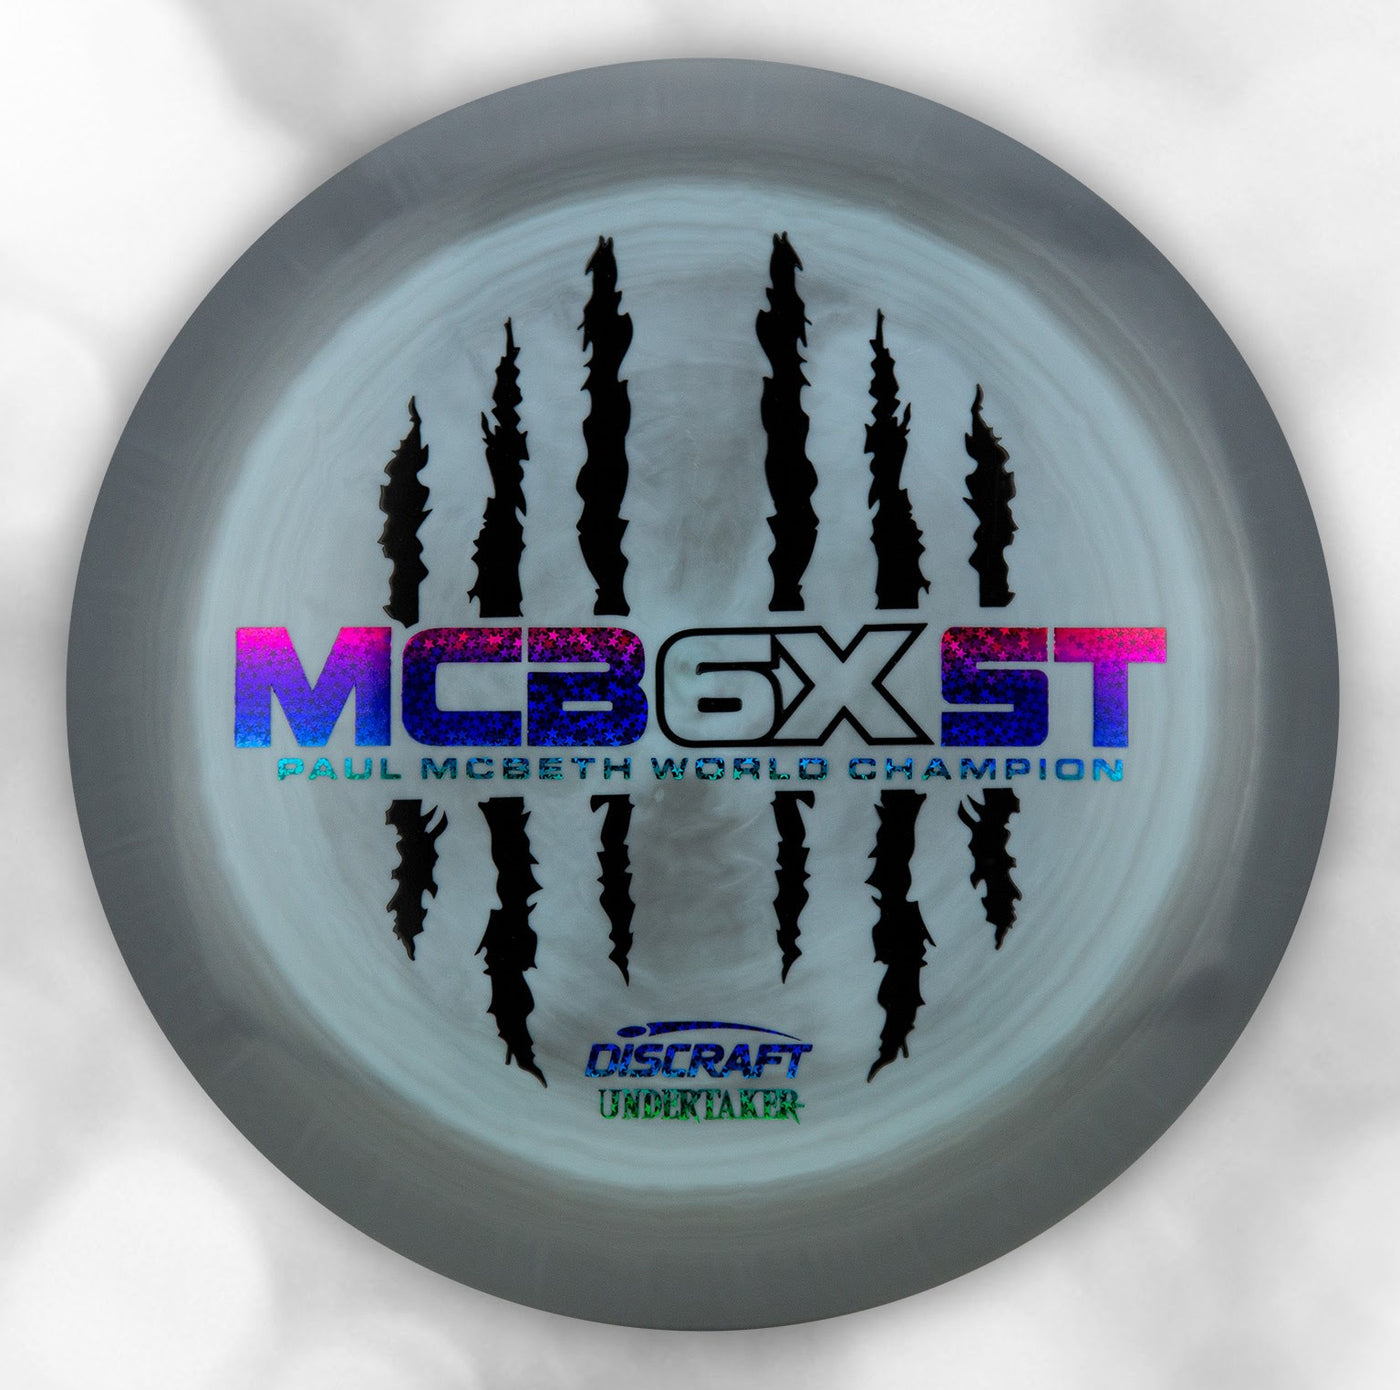 Discraft ESP Swirl Undertaker Fairway Driver with McBeast 6X Claw PM World Champ Stamp - Speed 9